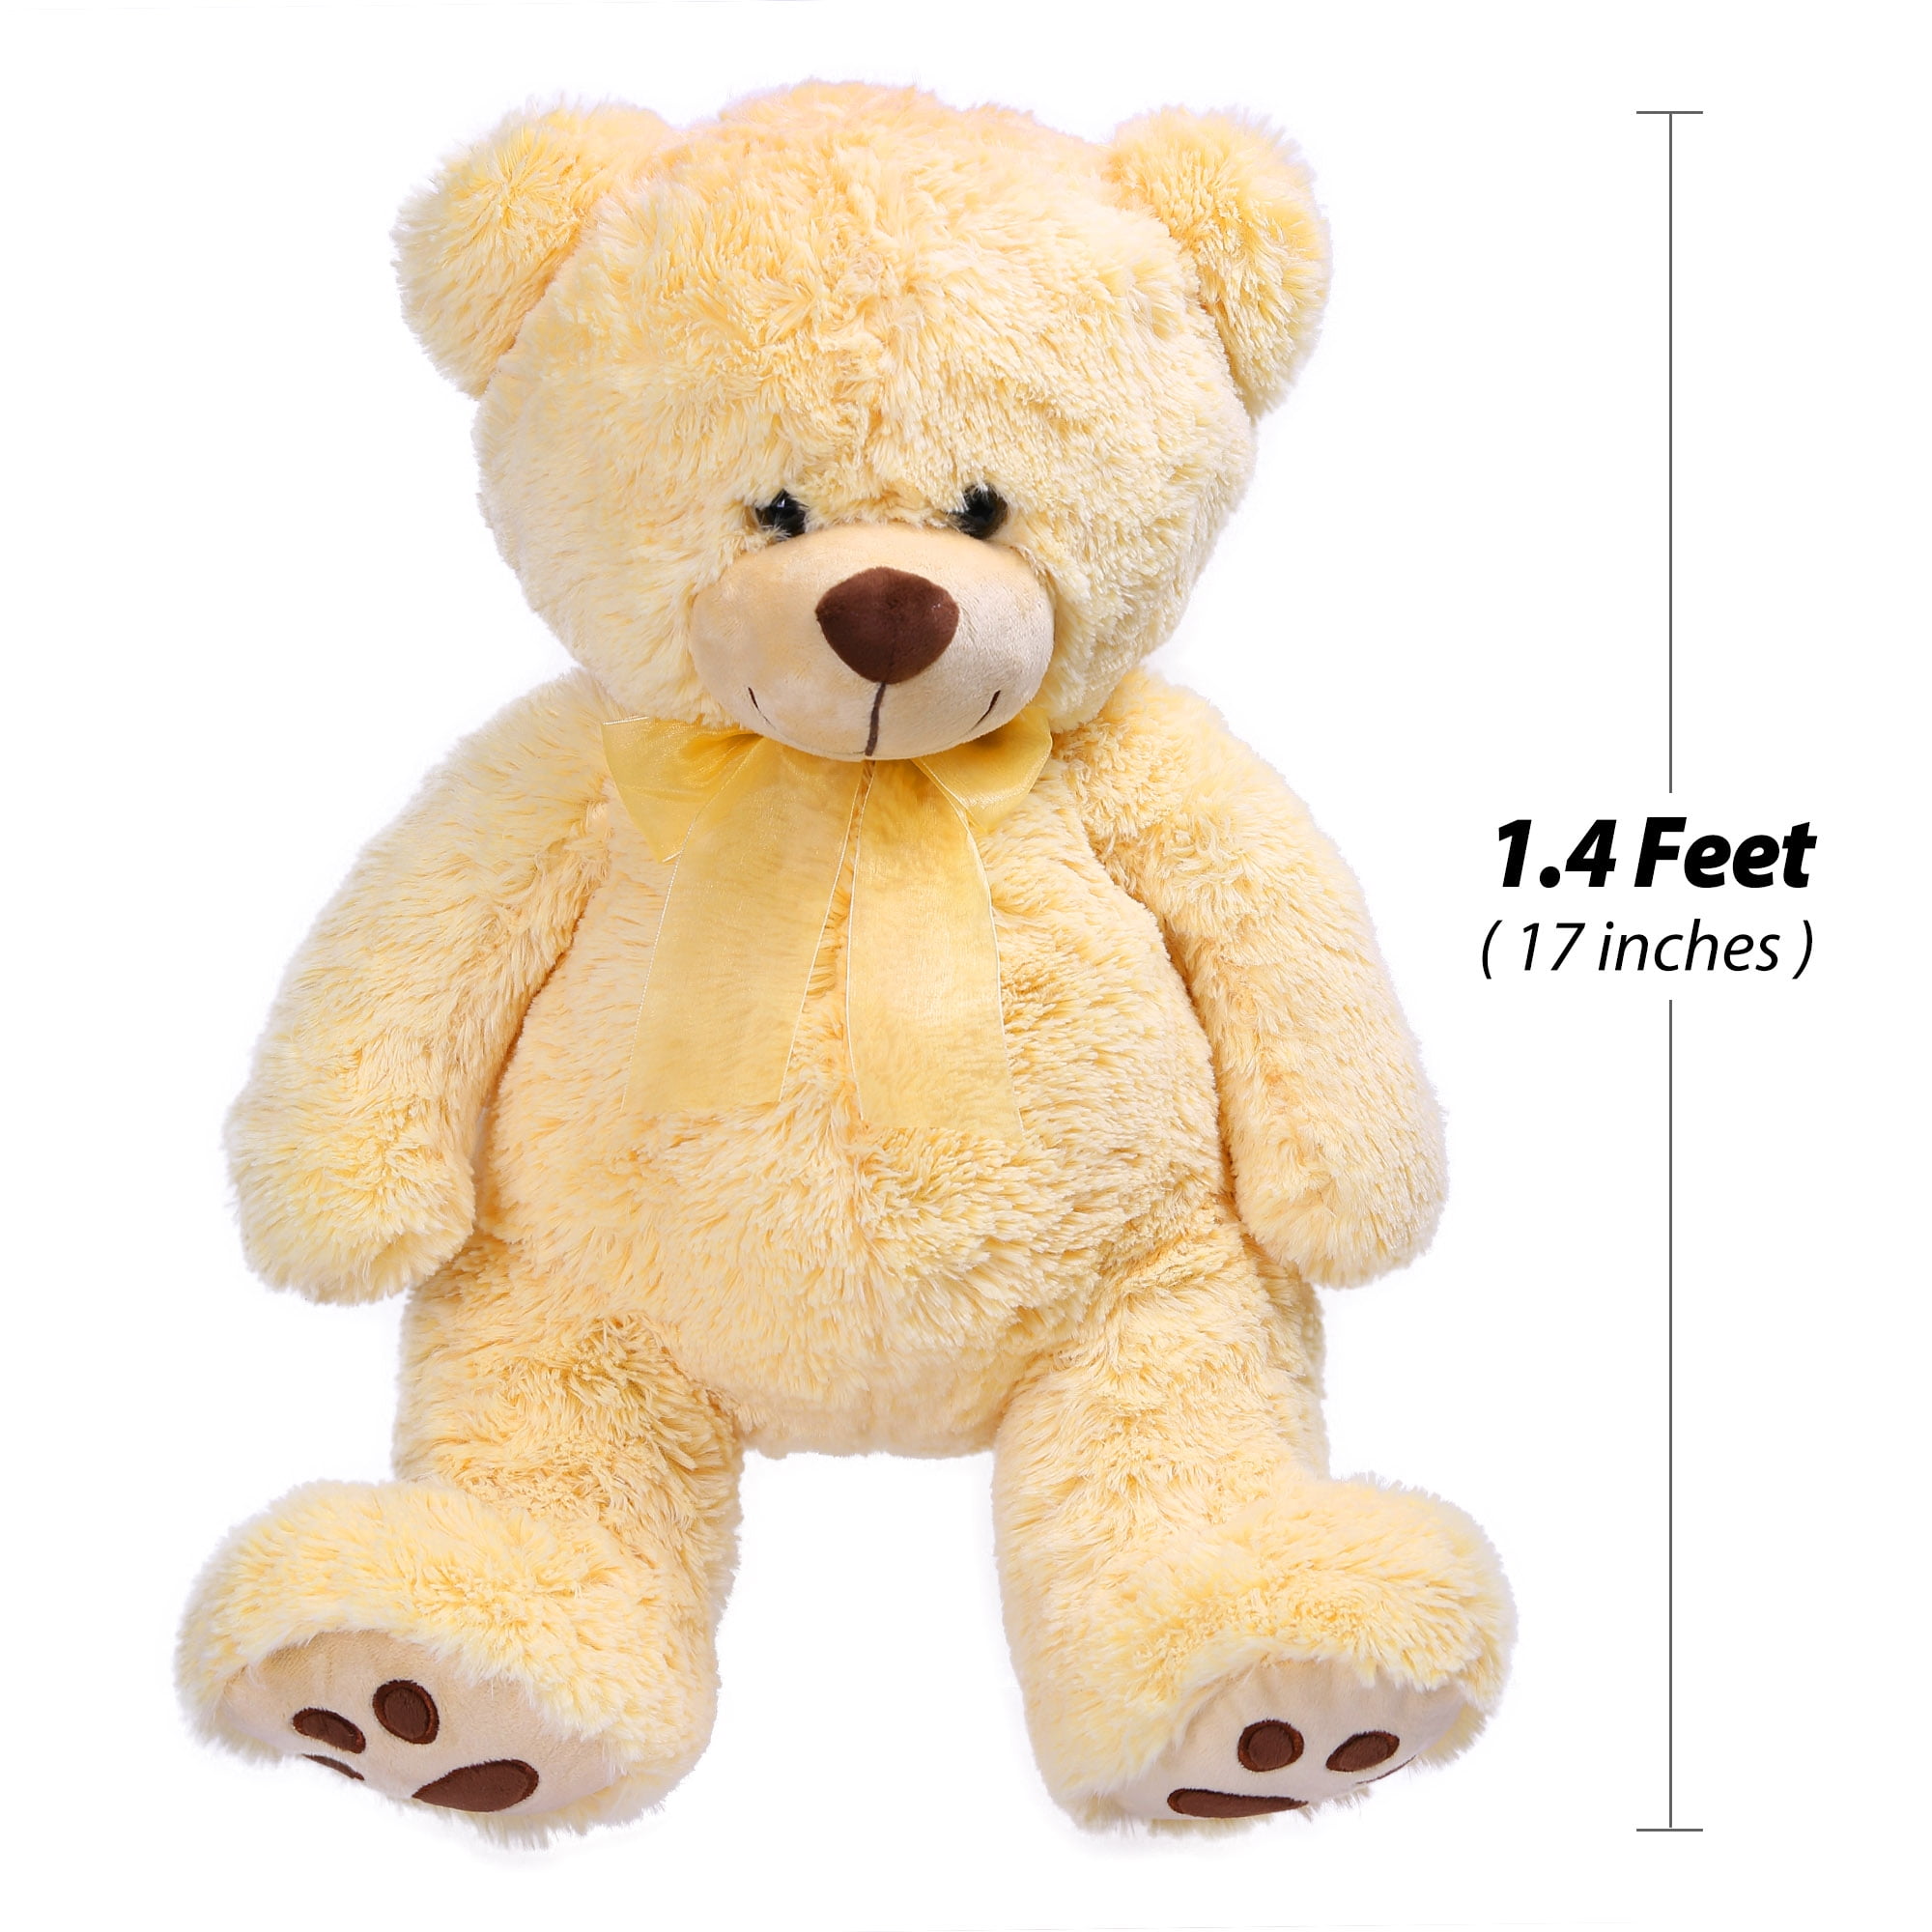 1 foot teddy bear